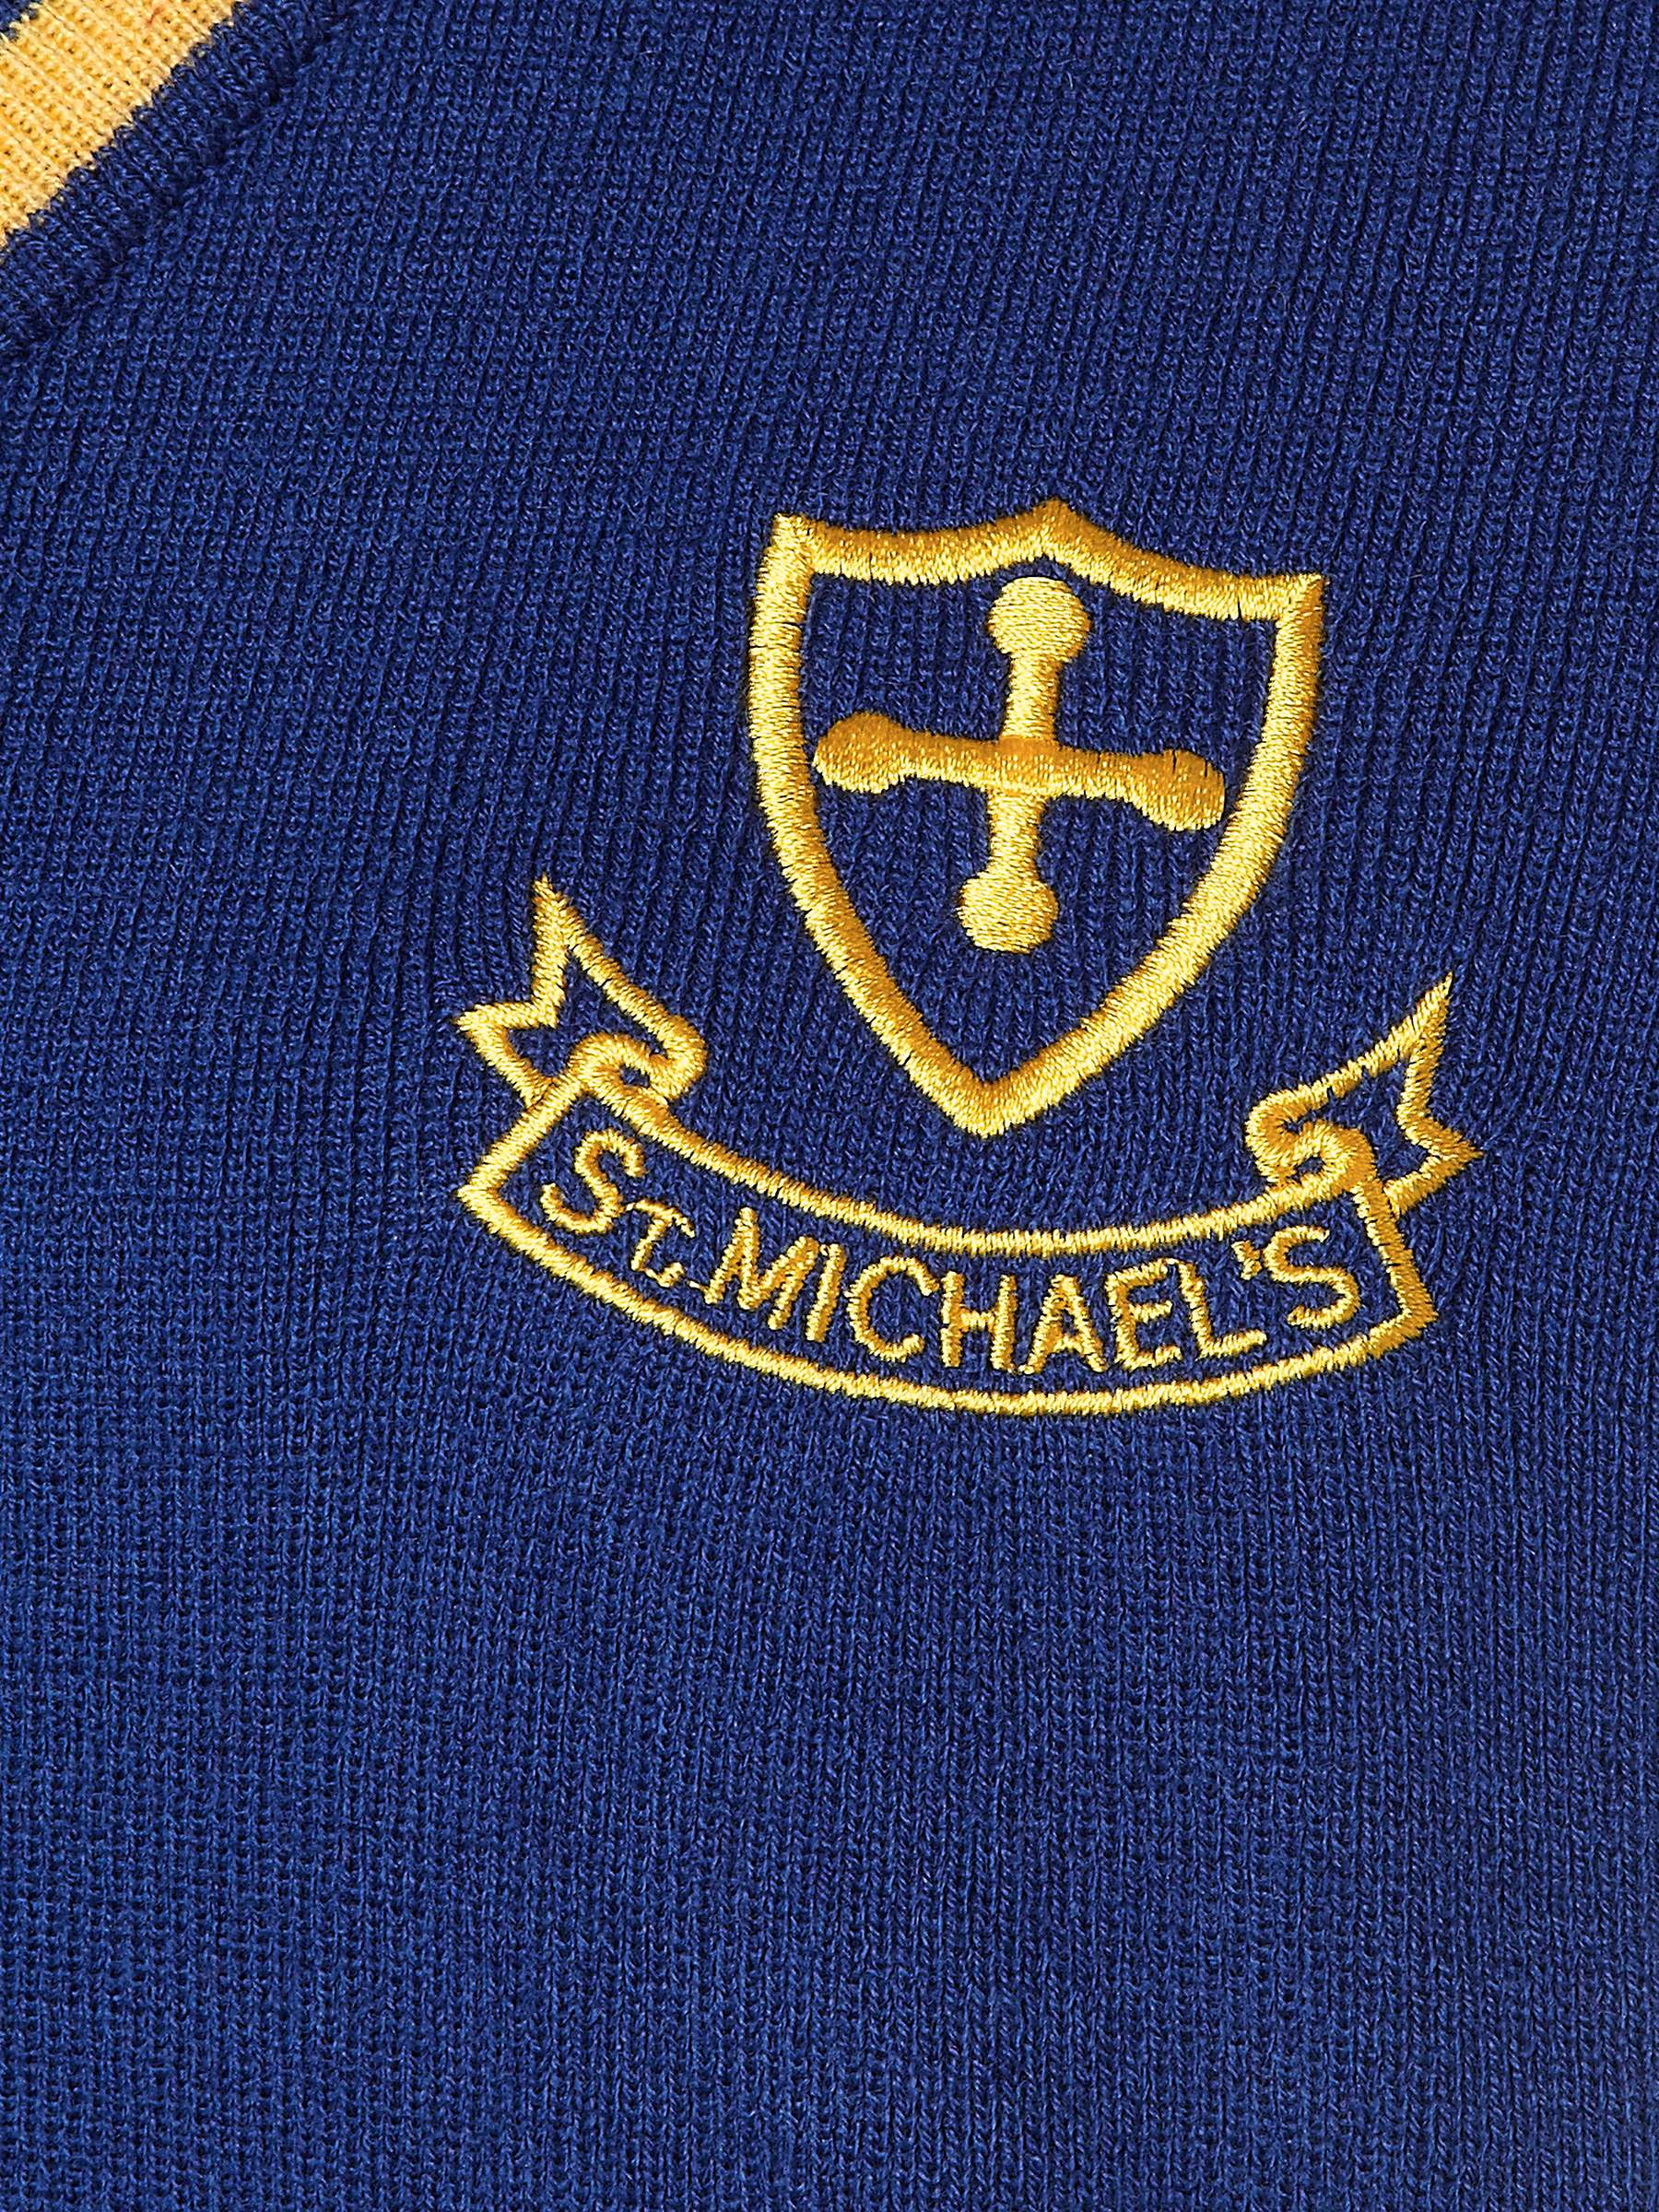 Buy St Michael's Church of England Preparatory School Unisex Jumper, Royal Blue/Amber Online at johnlewis.com